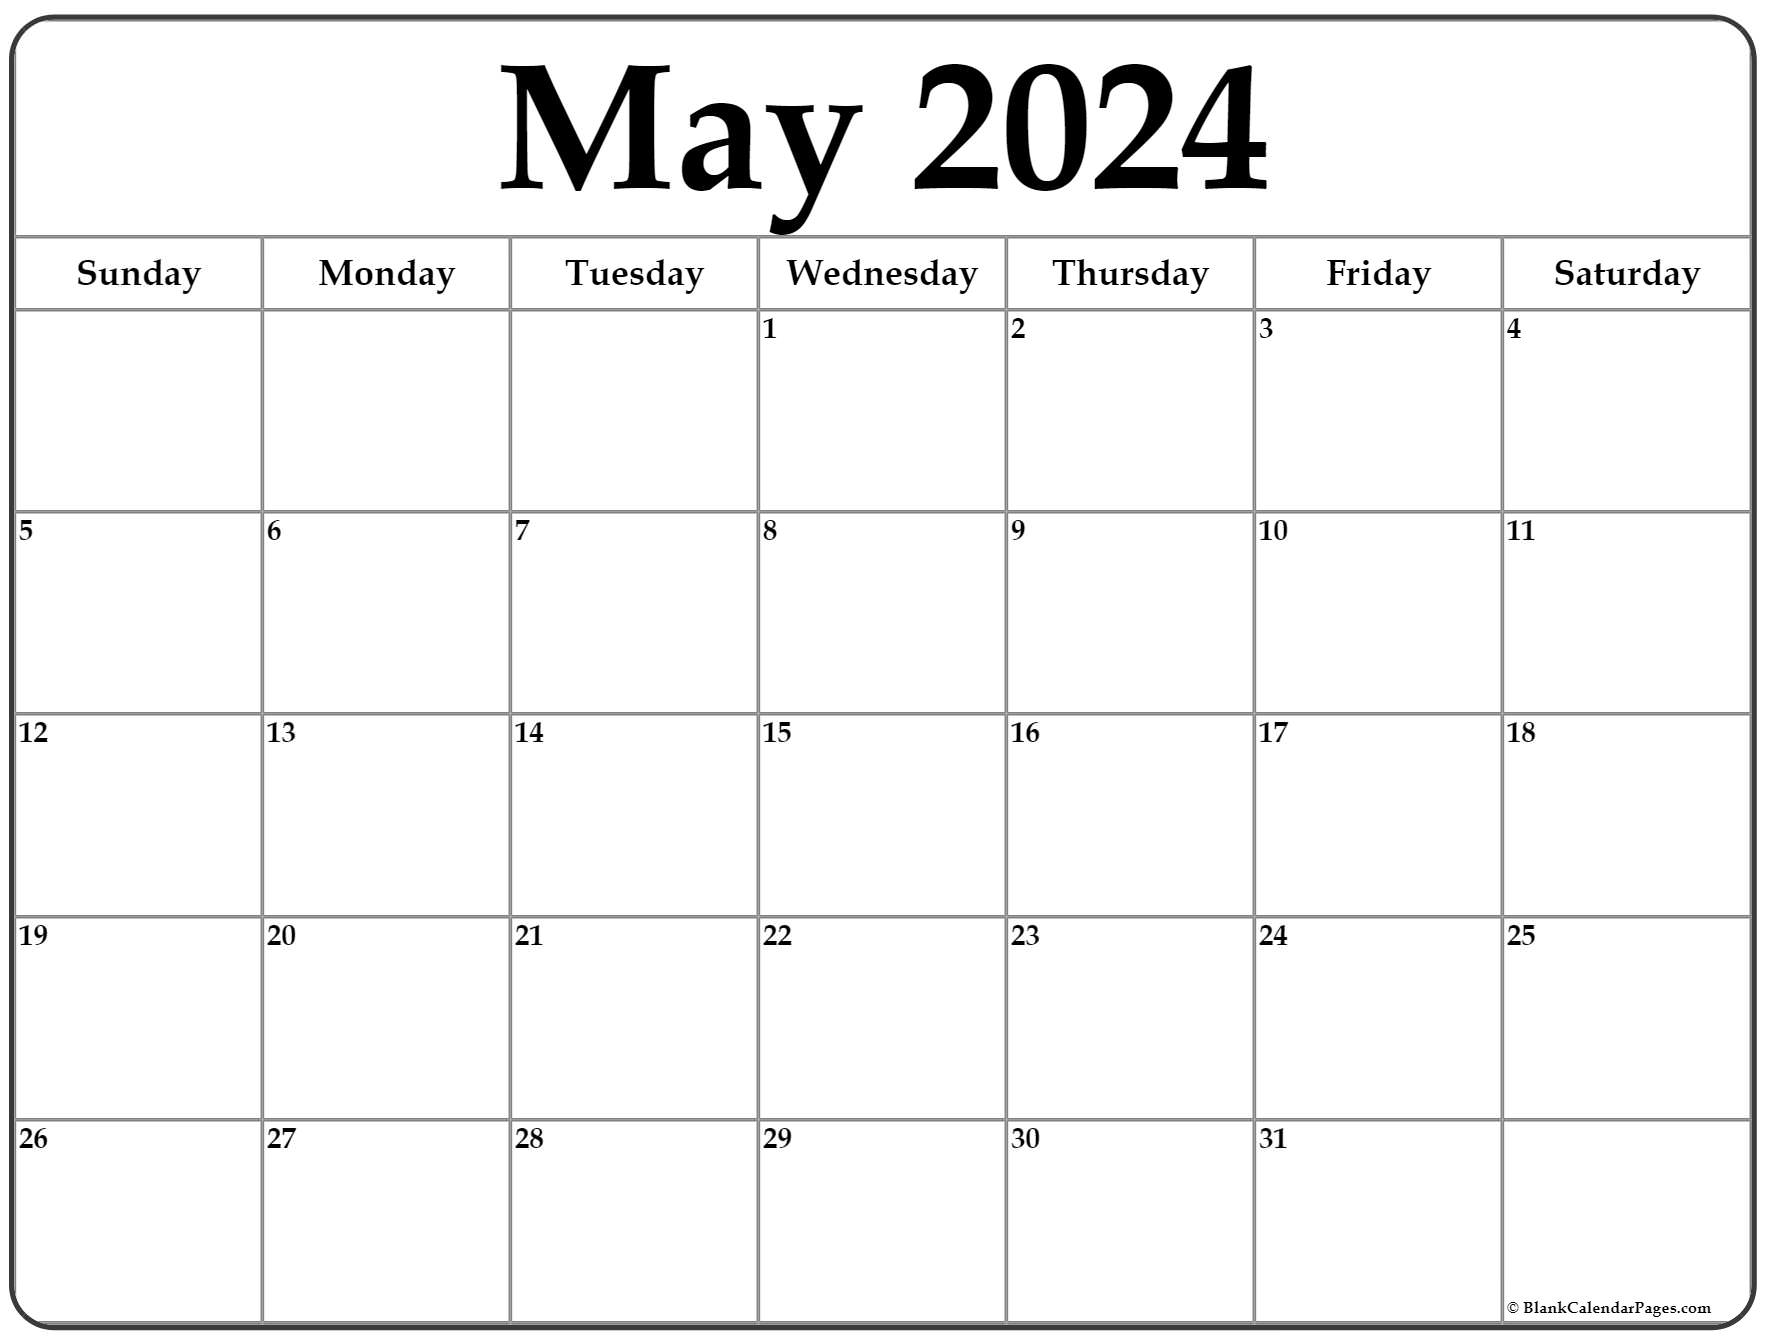 May Printable Calendar 2022 May 2022 Calendar | Free Printable Calendar Templates